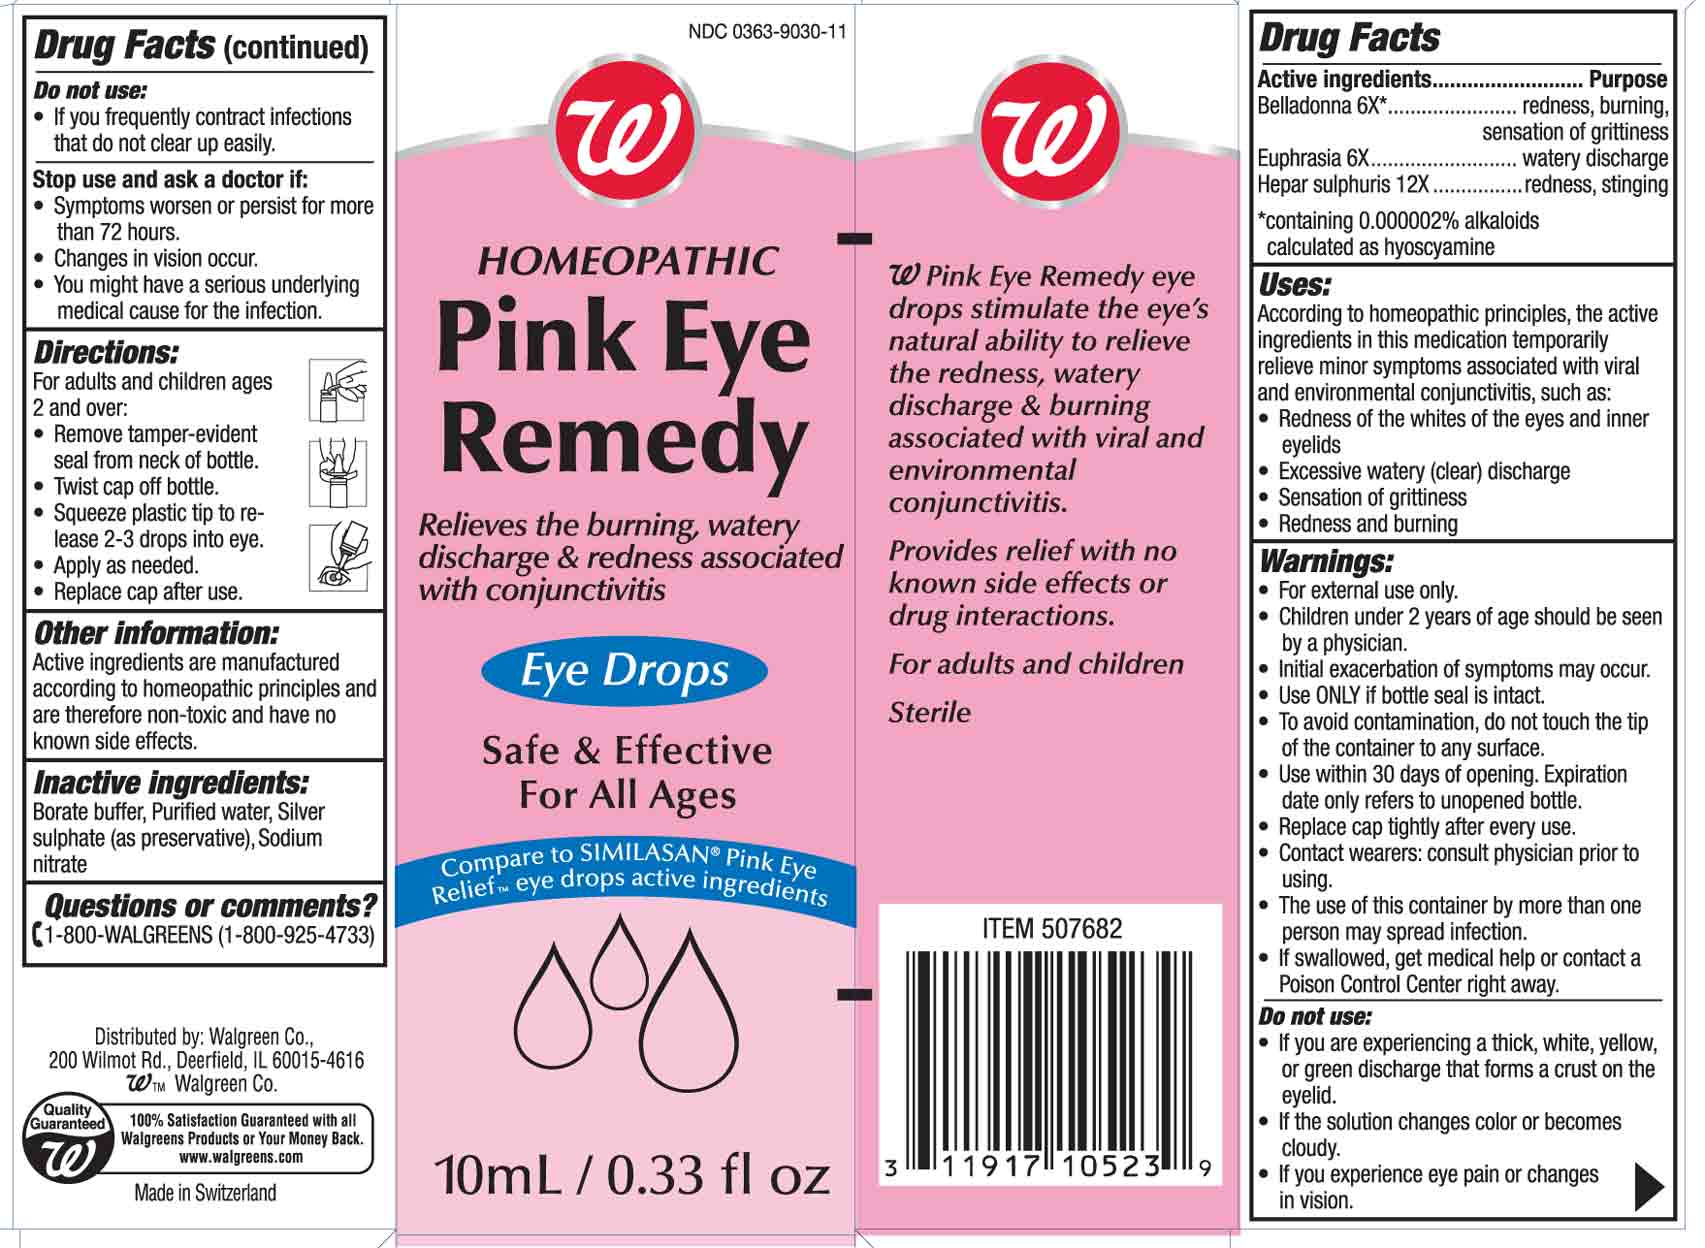 Walgreens Pink Eye Remedy box